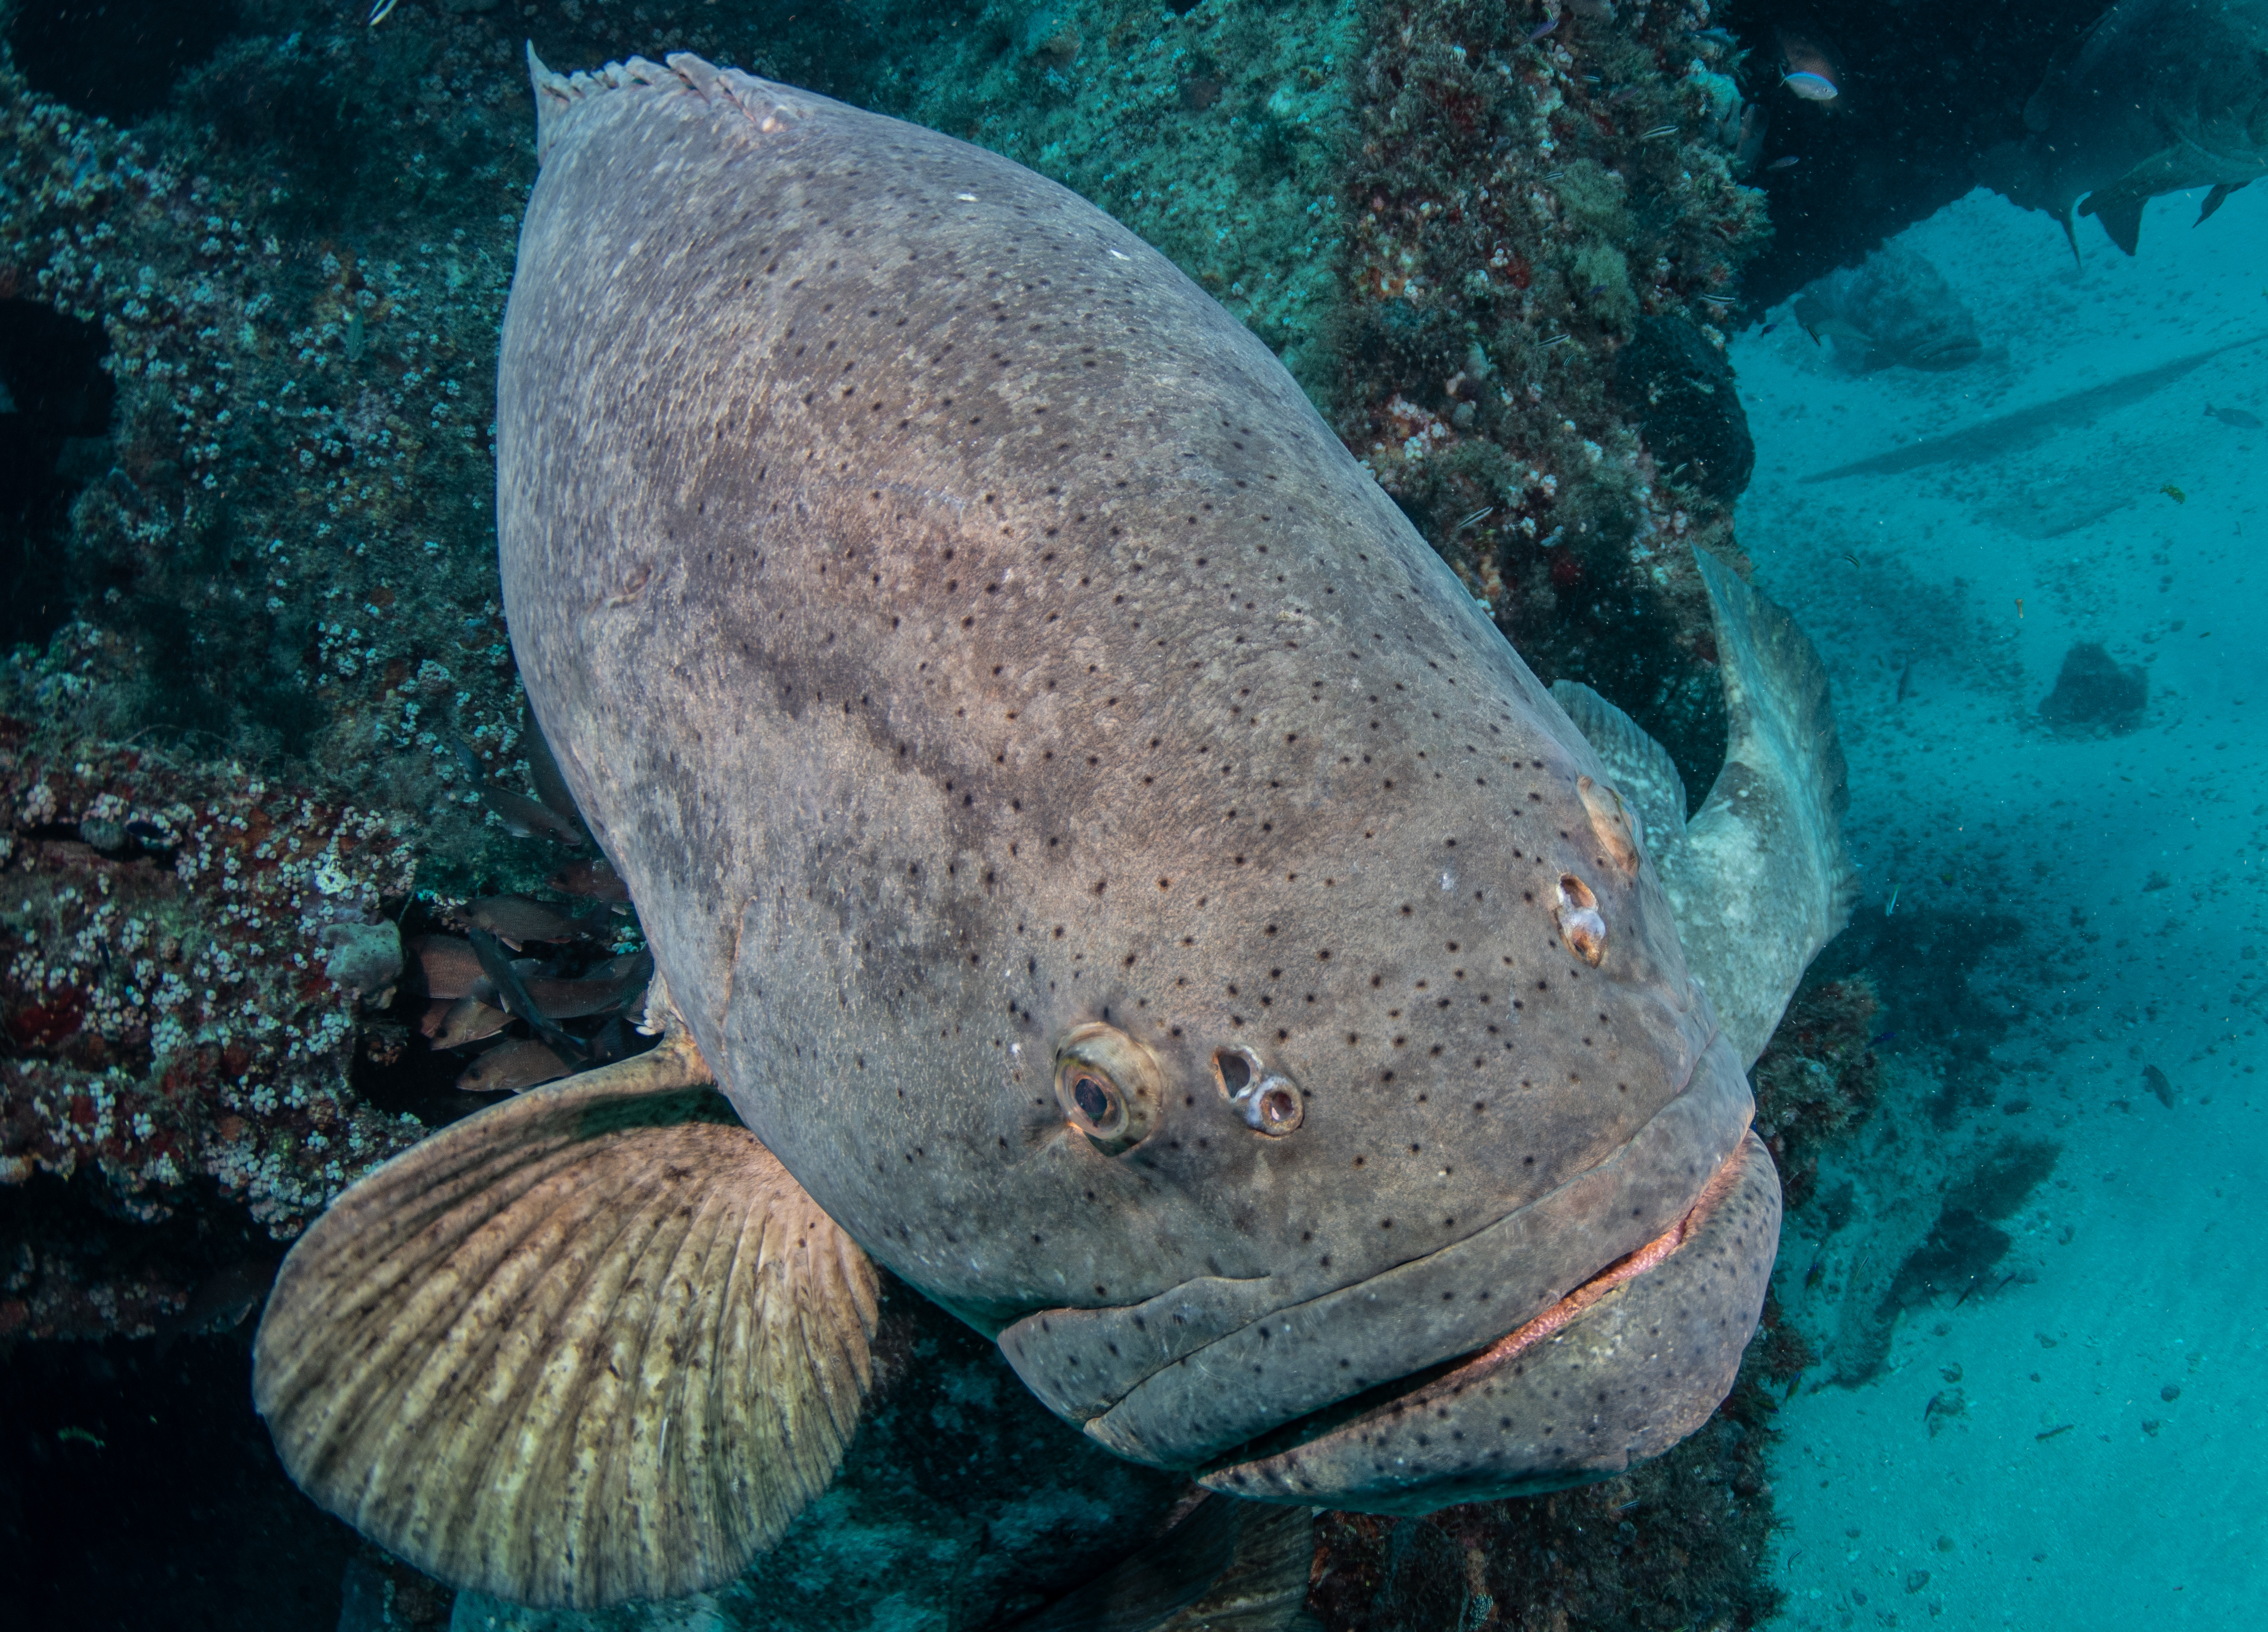 Goliath grouper, Wreck Trek, Jupiter, FL, USA. Photo by Gary Rose, MD